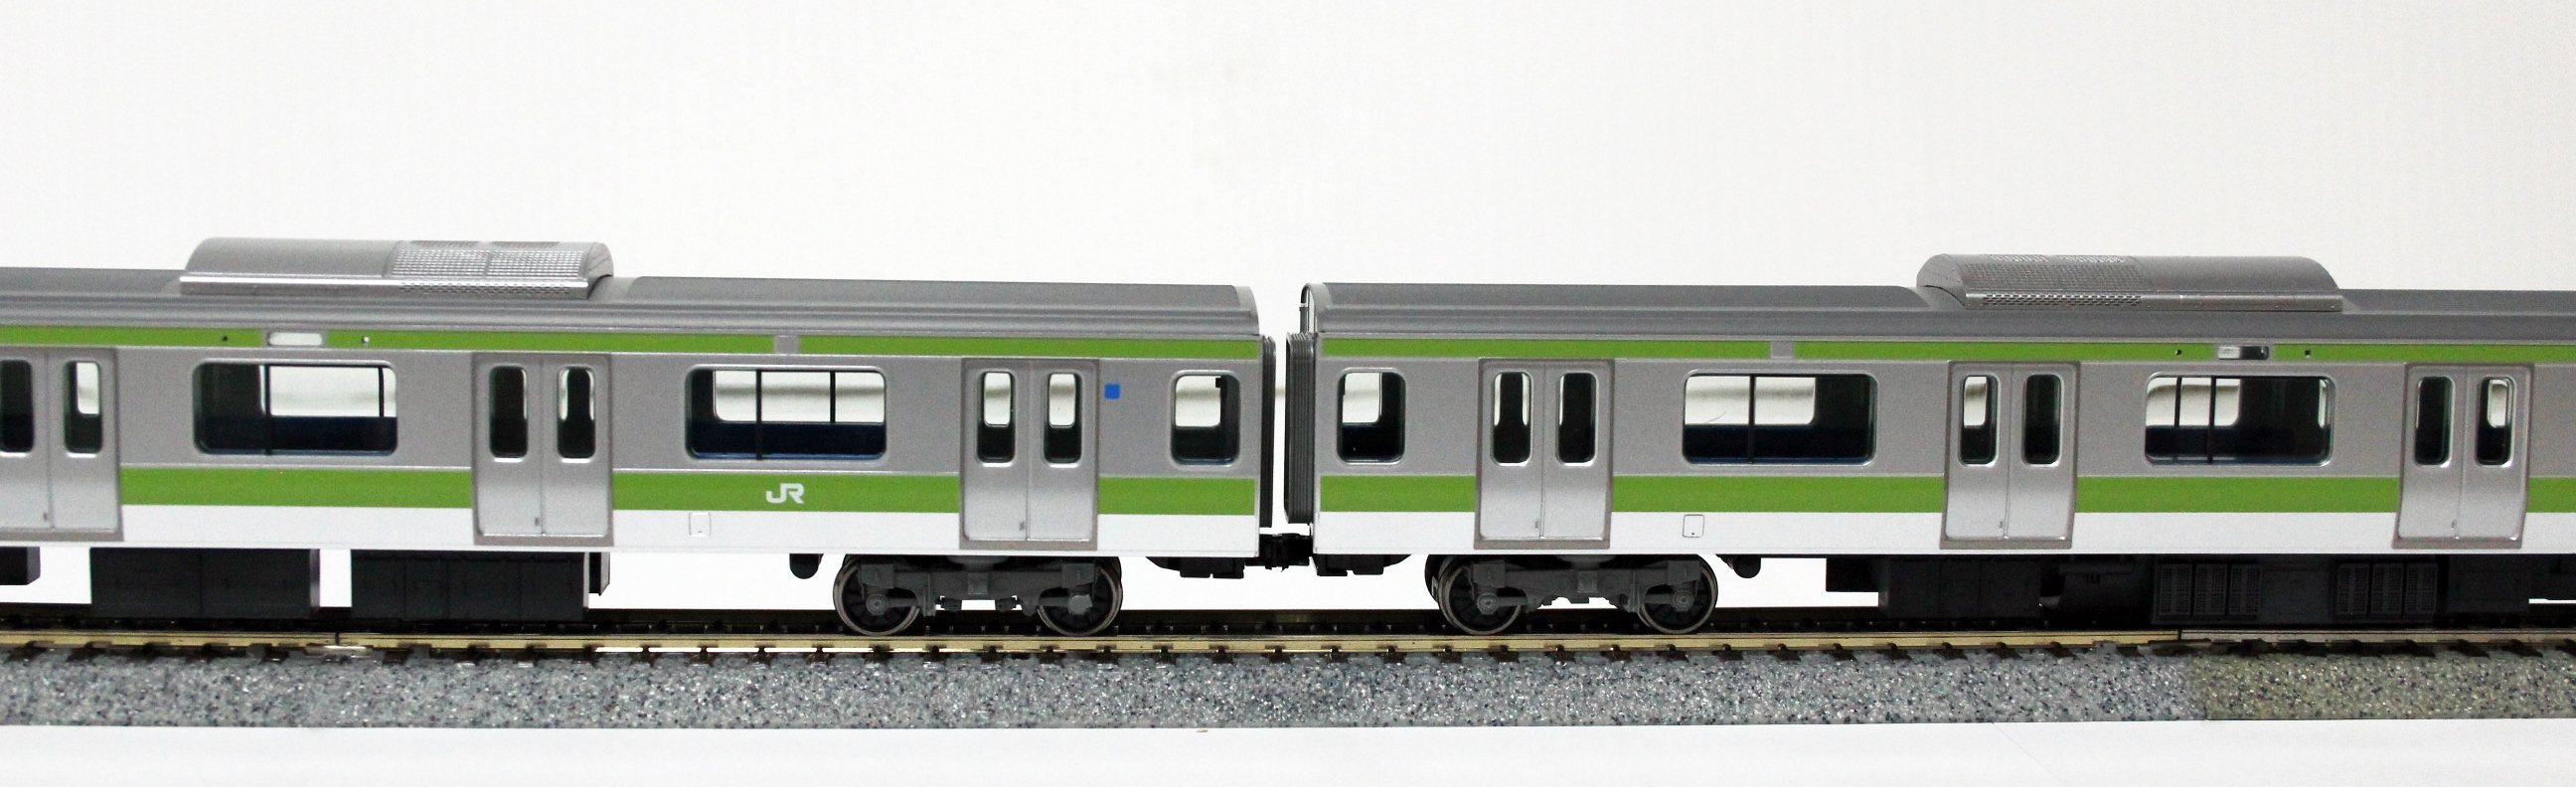 定番品質保証TOMIX HO-053 JR E231 500系 通勤電車(山手線) 基本セット HOゲージ 鉄道模型 中古 良好 M6504600 JR、国鉄車輌